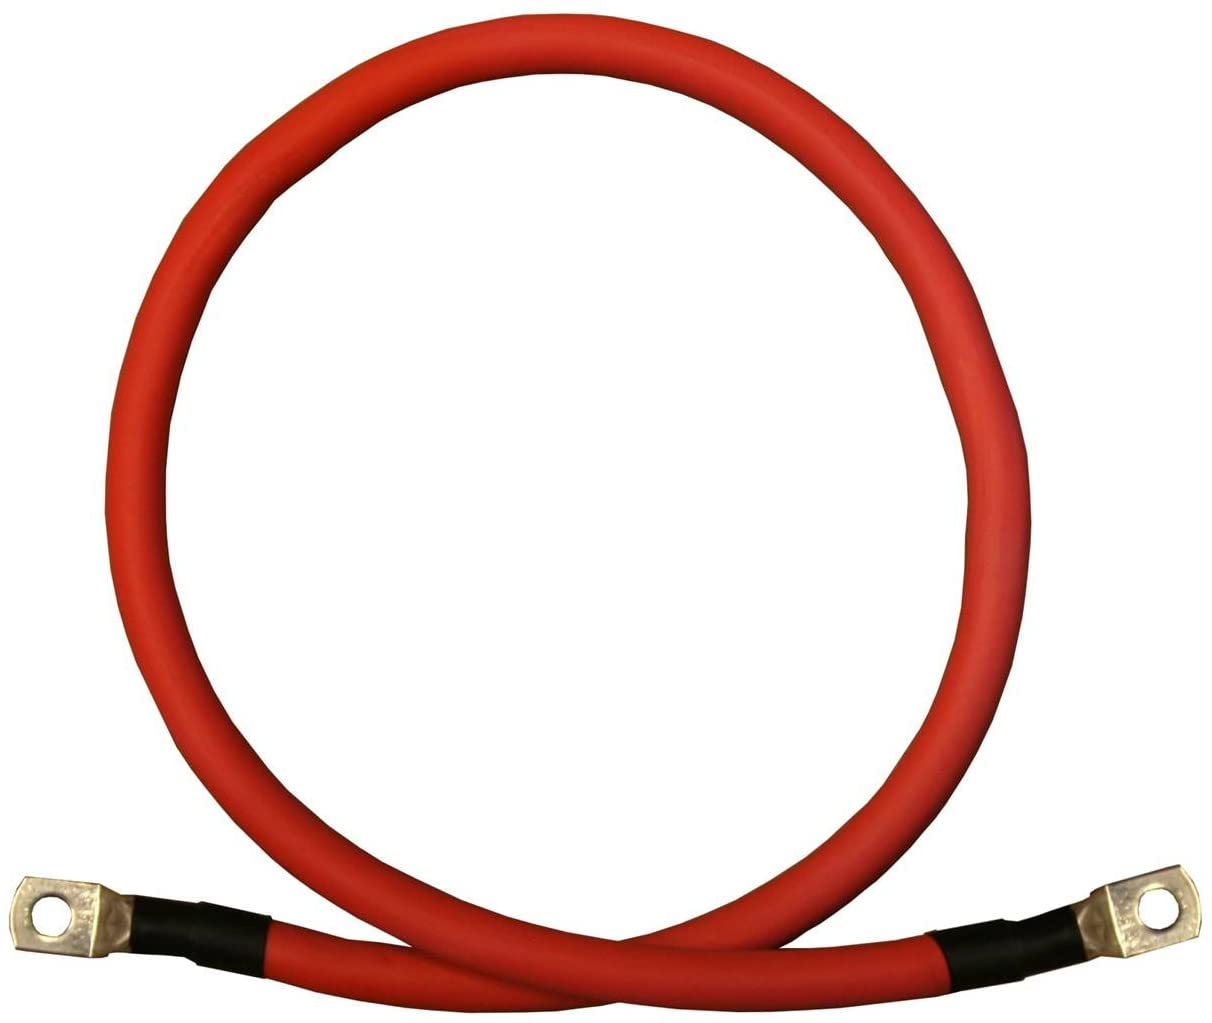 Jehu Garcia BNTECHGO 8 Gauge Silicone Wire Ultra Flexible 6 Feet